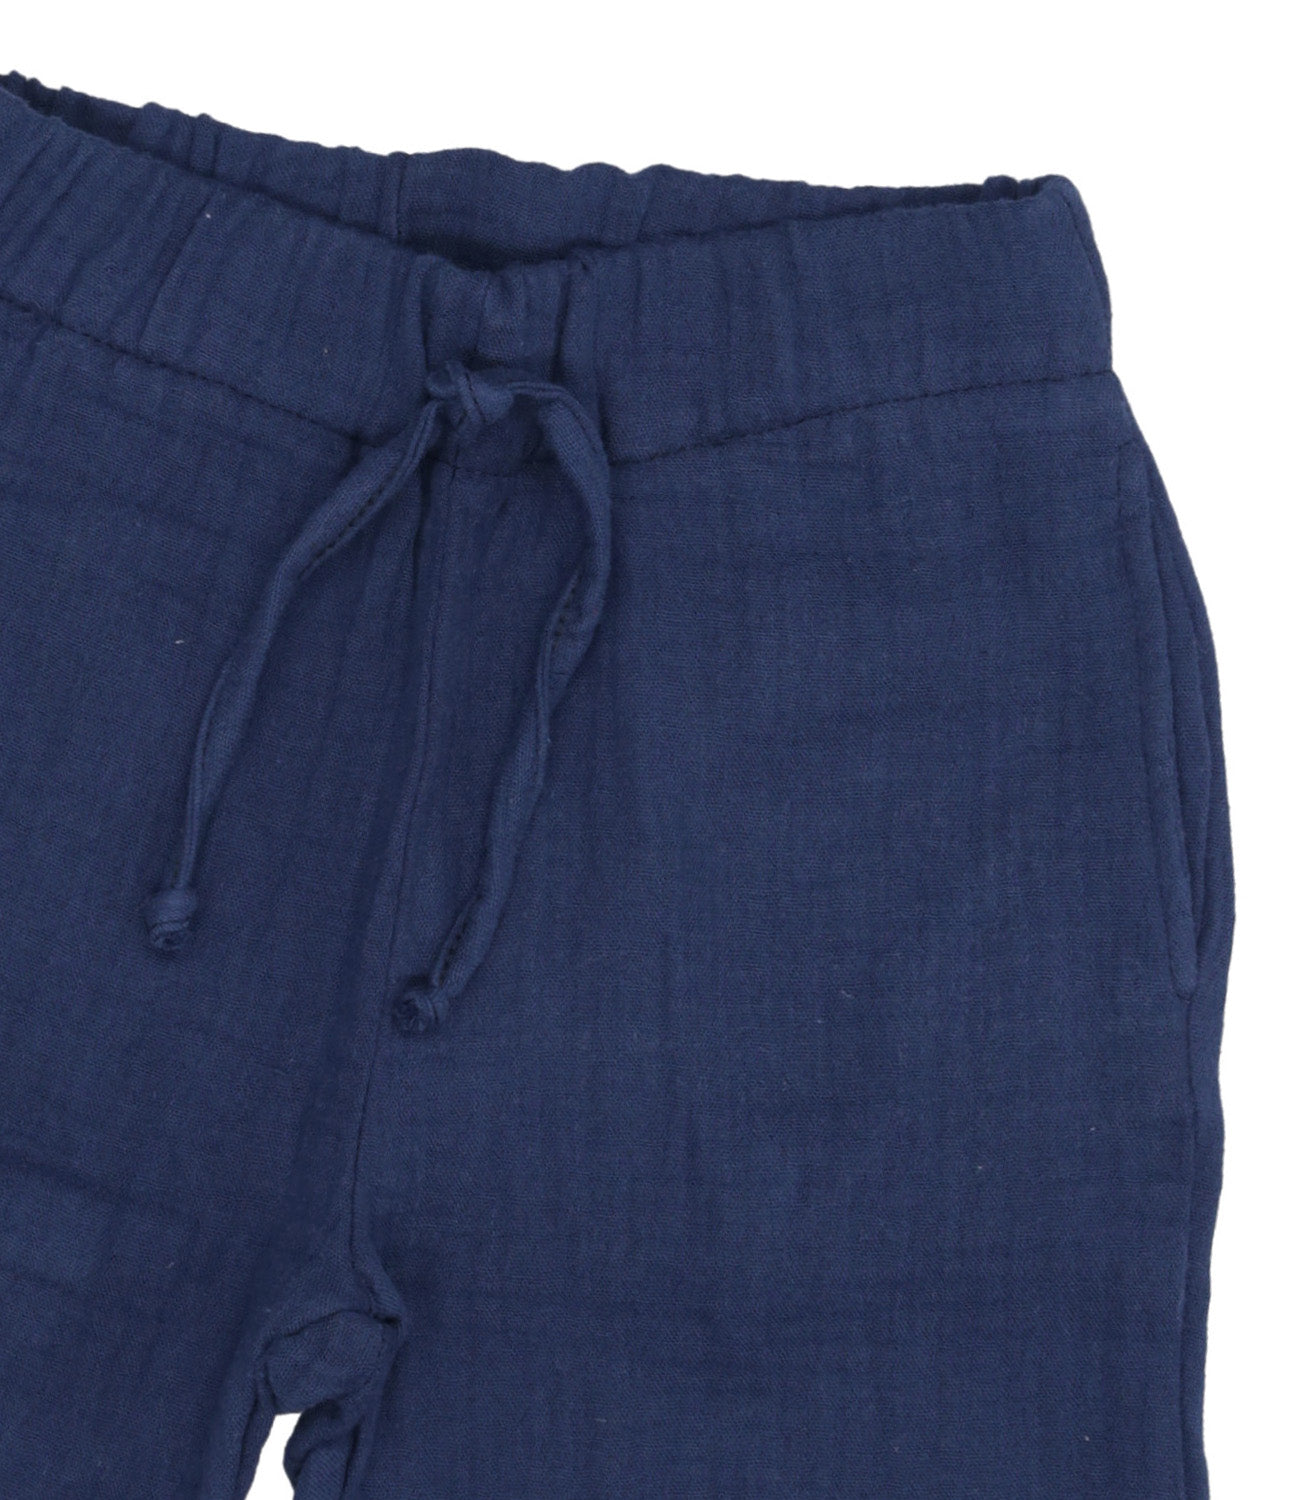 Lalalù | Navy Blue Bermuda Shorts